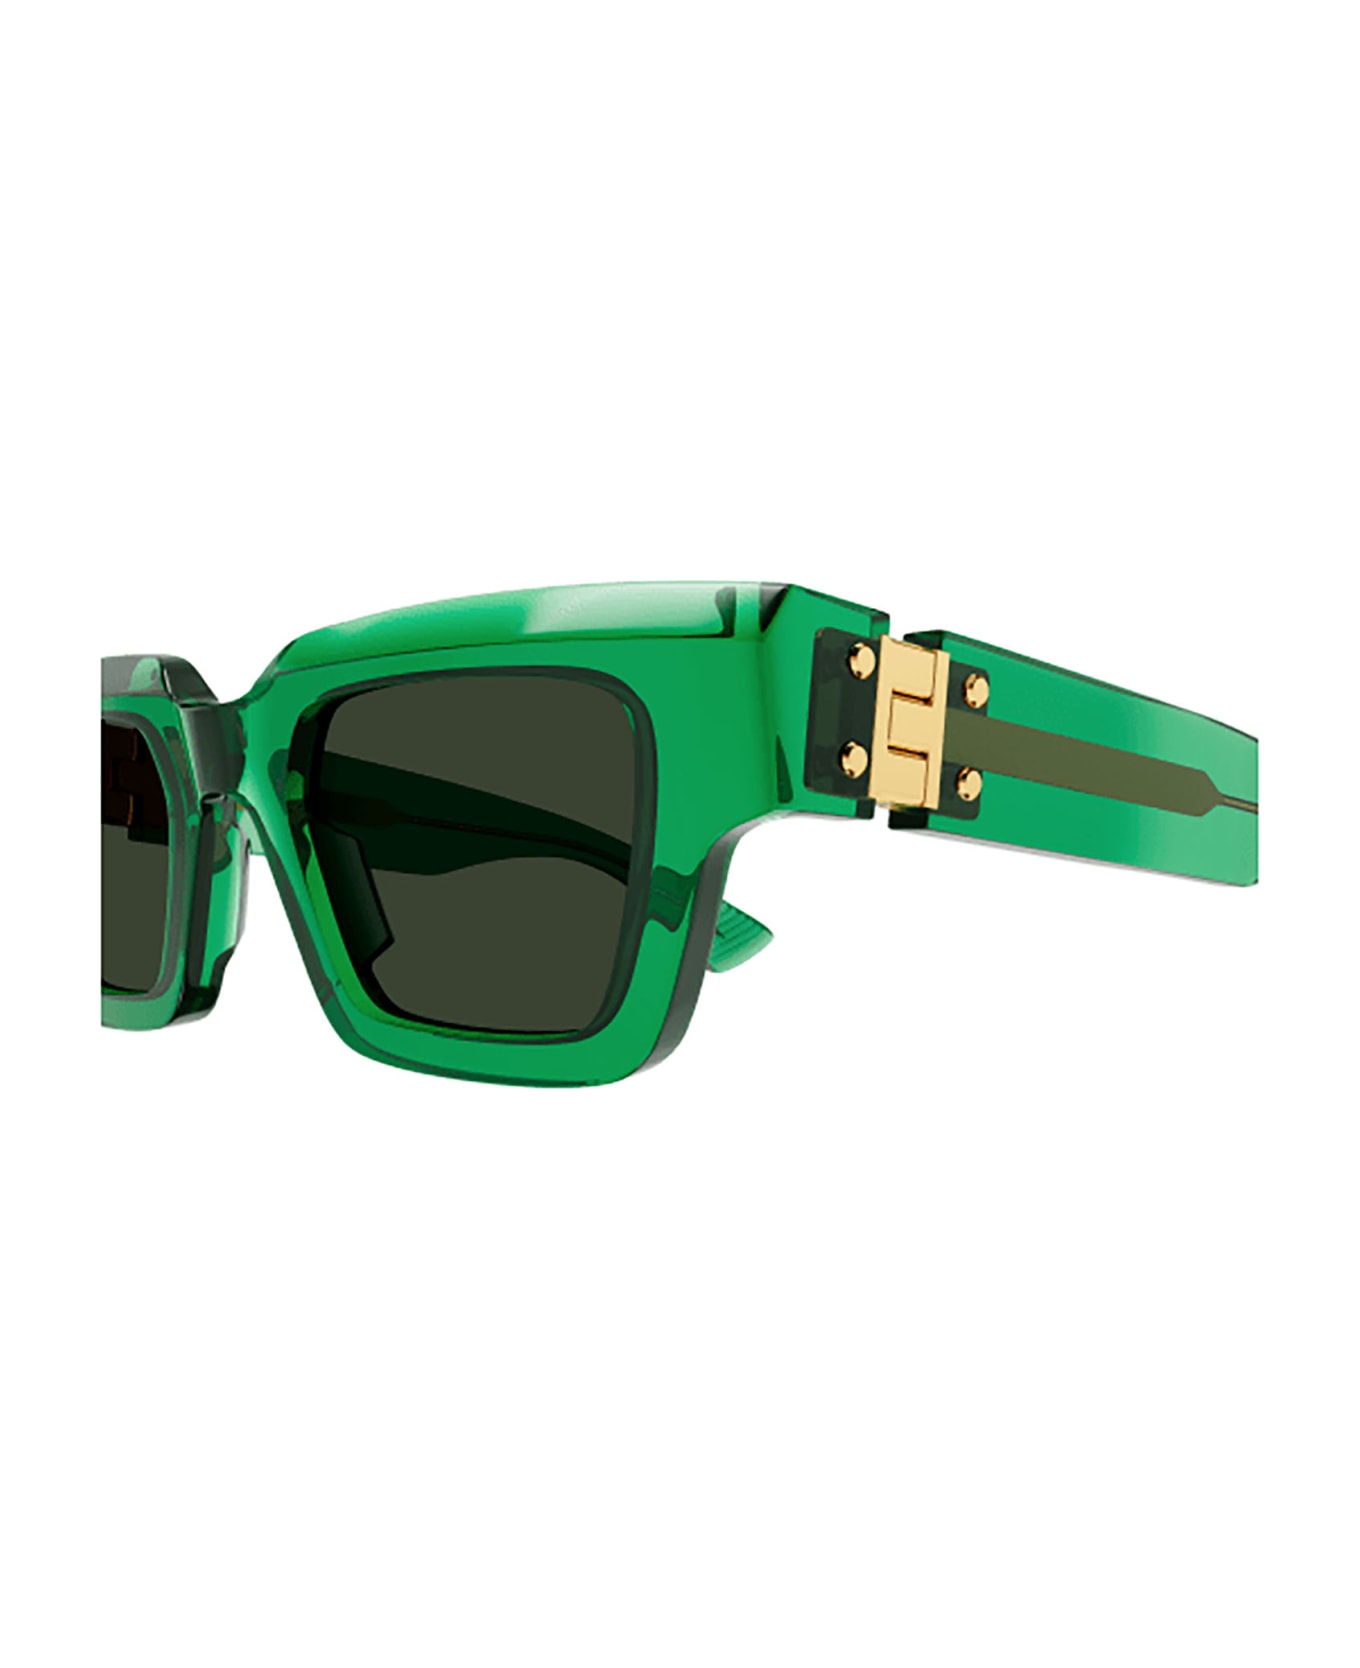 Bottega Veneta Eyewear 1g7r4ni0a - 002 green green green